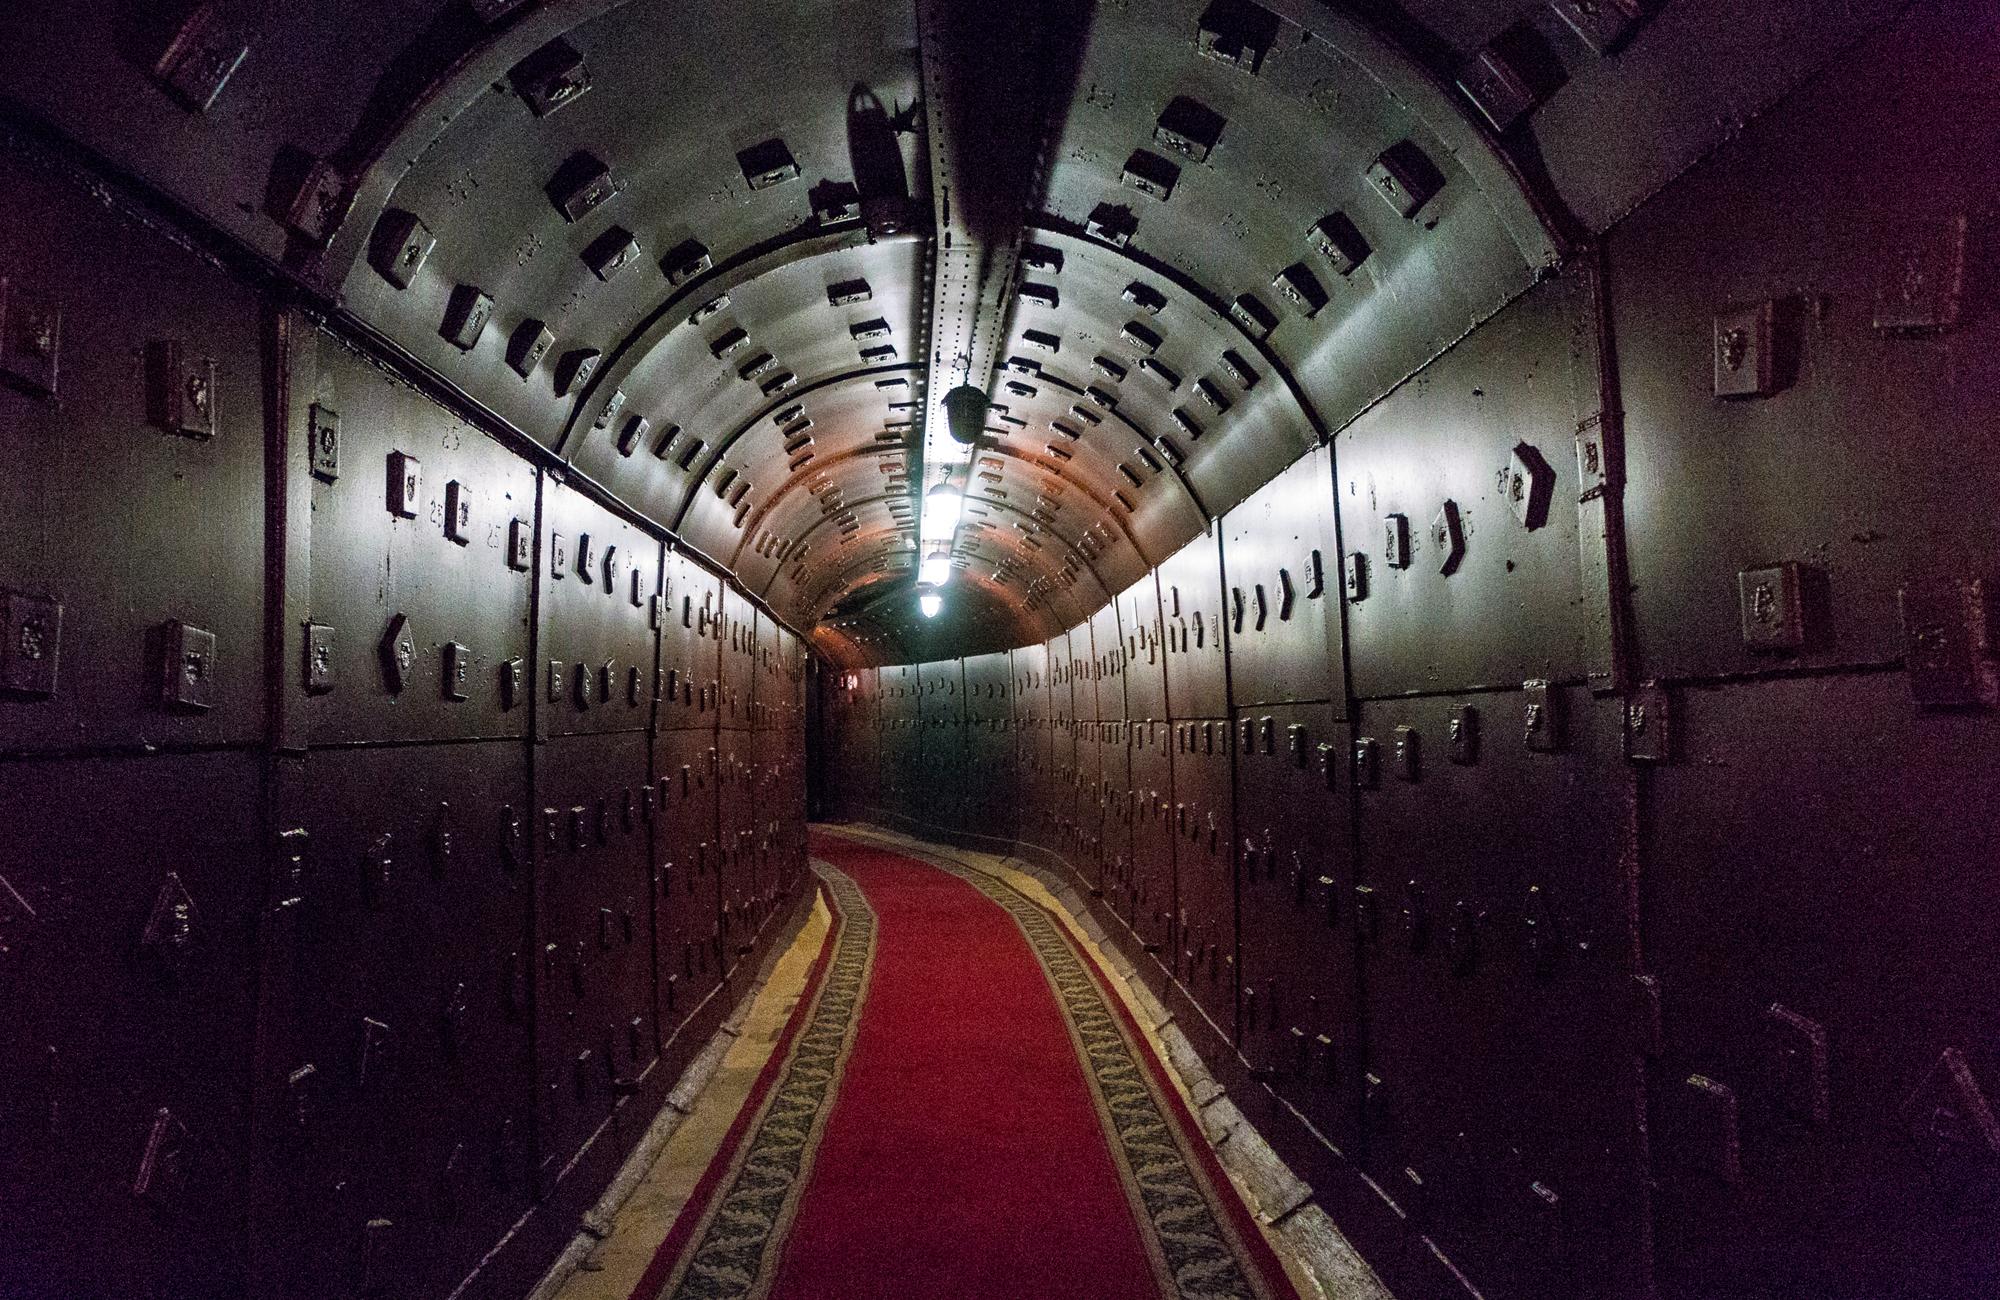 visit a nuclear bunker